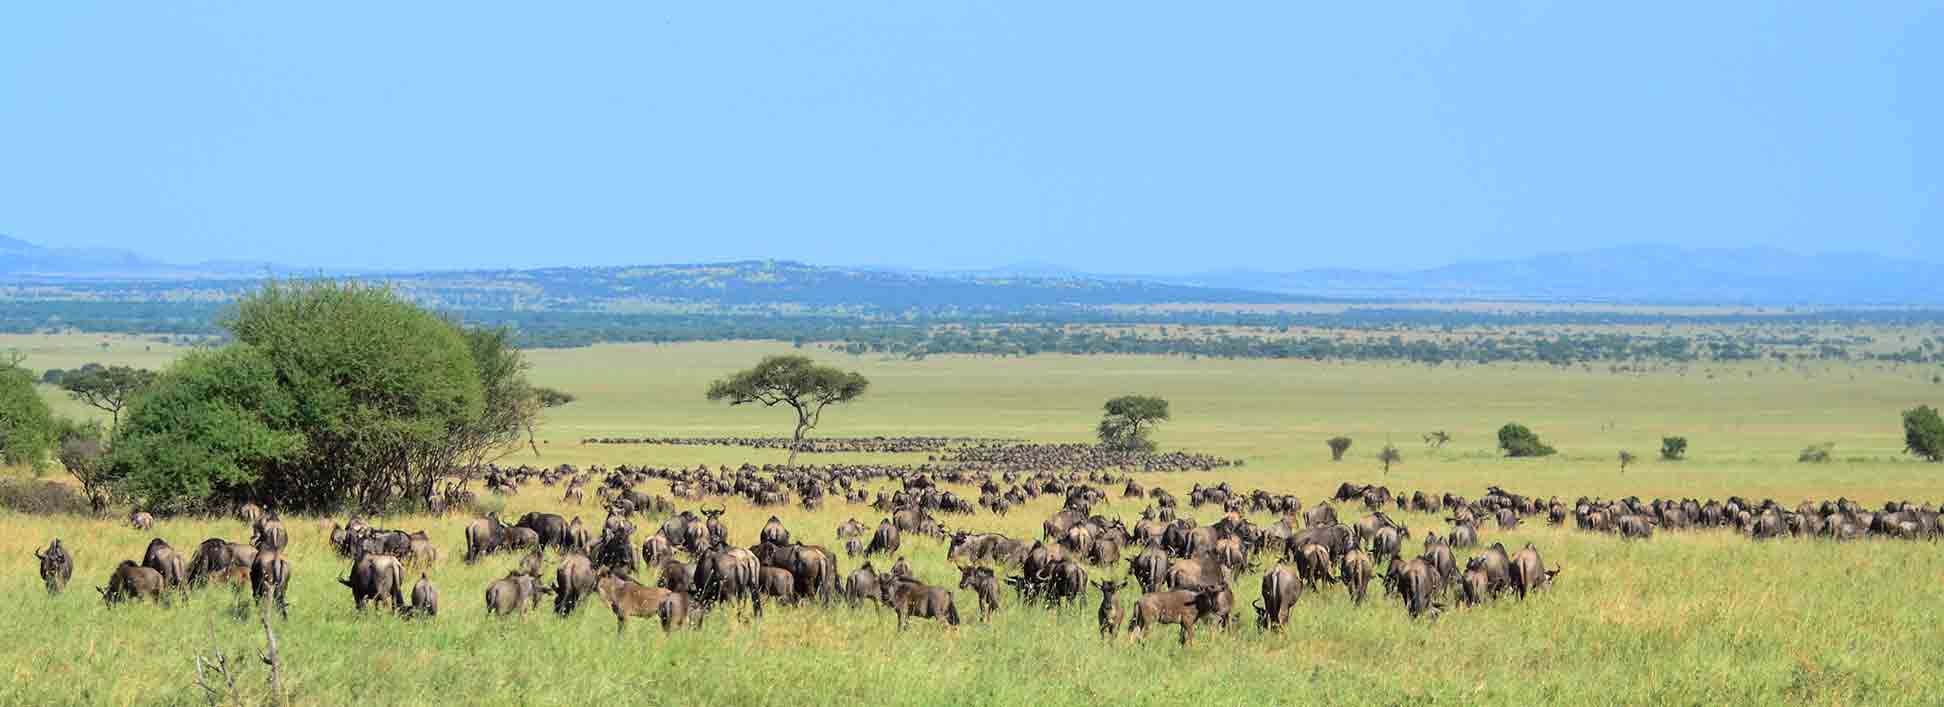 Wildebeest in the Serengeti National Park